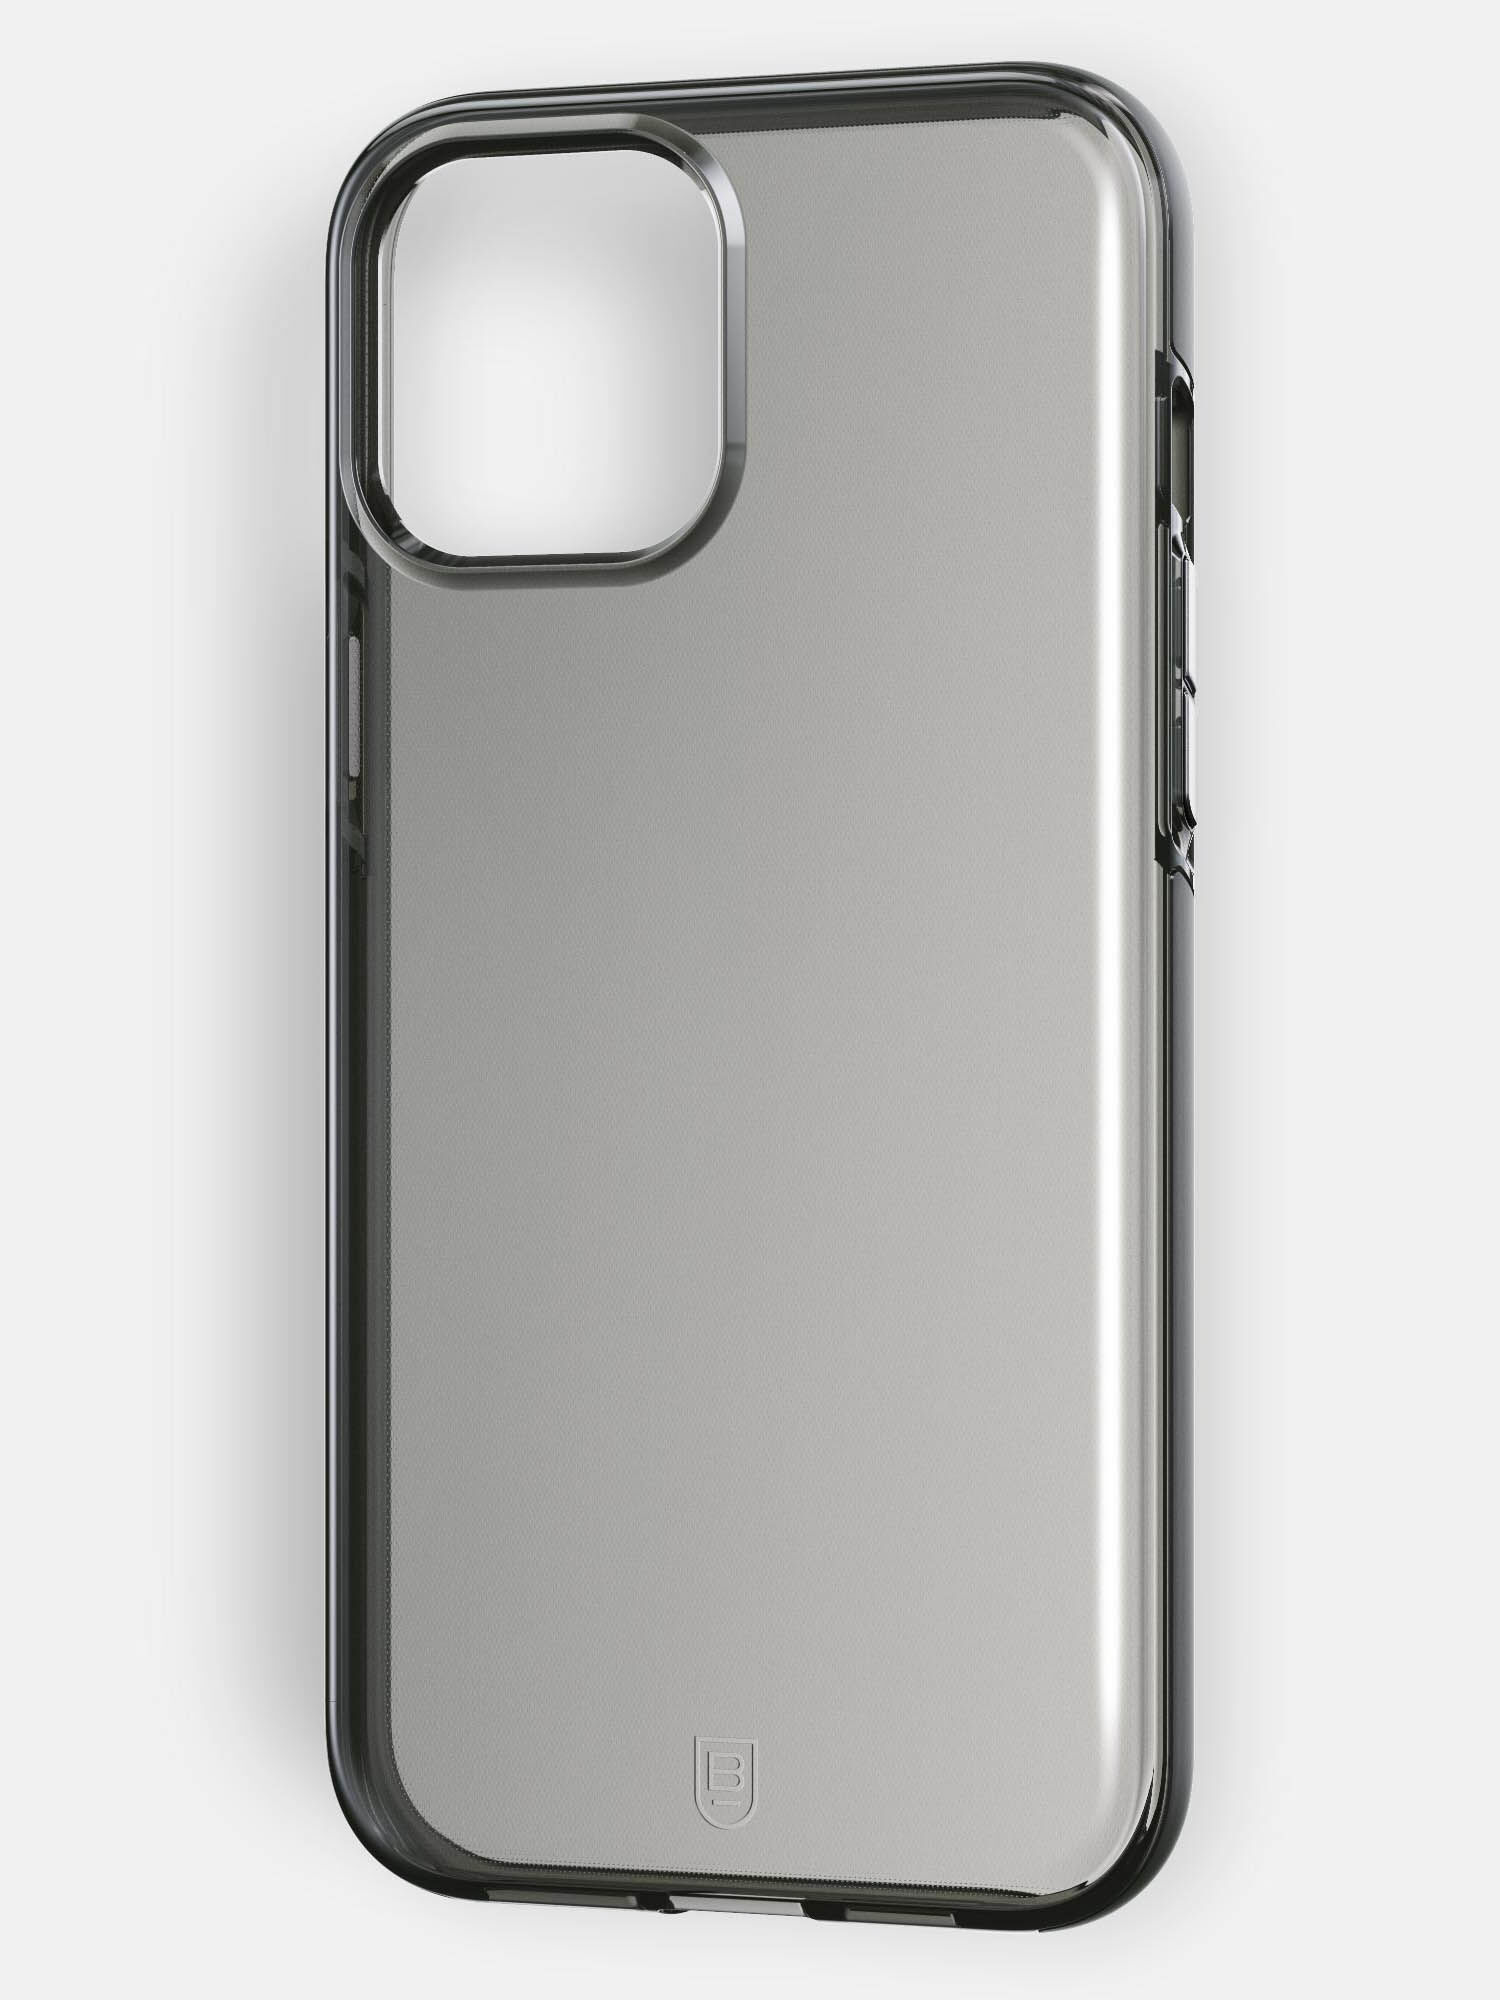 Apple iPhone 12 Pro Max Cases, Screen Protectors & Skins